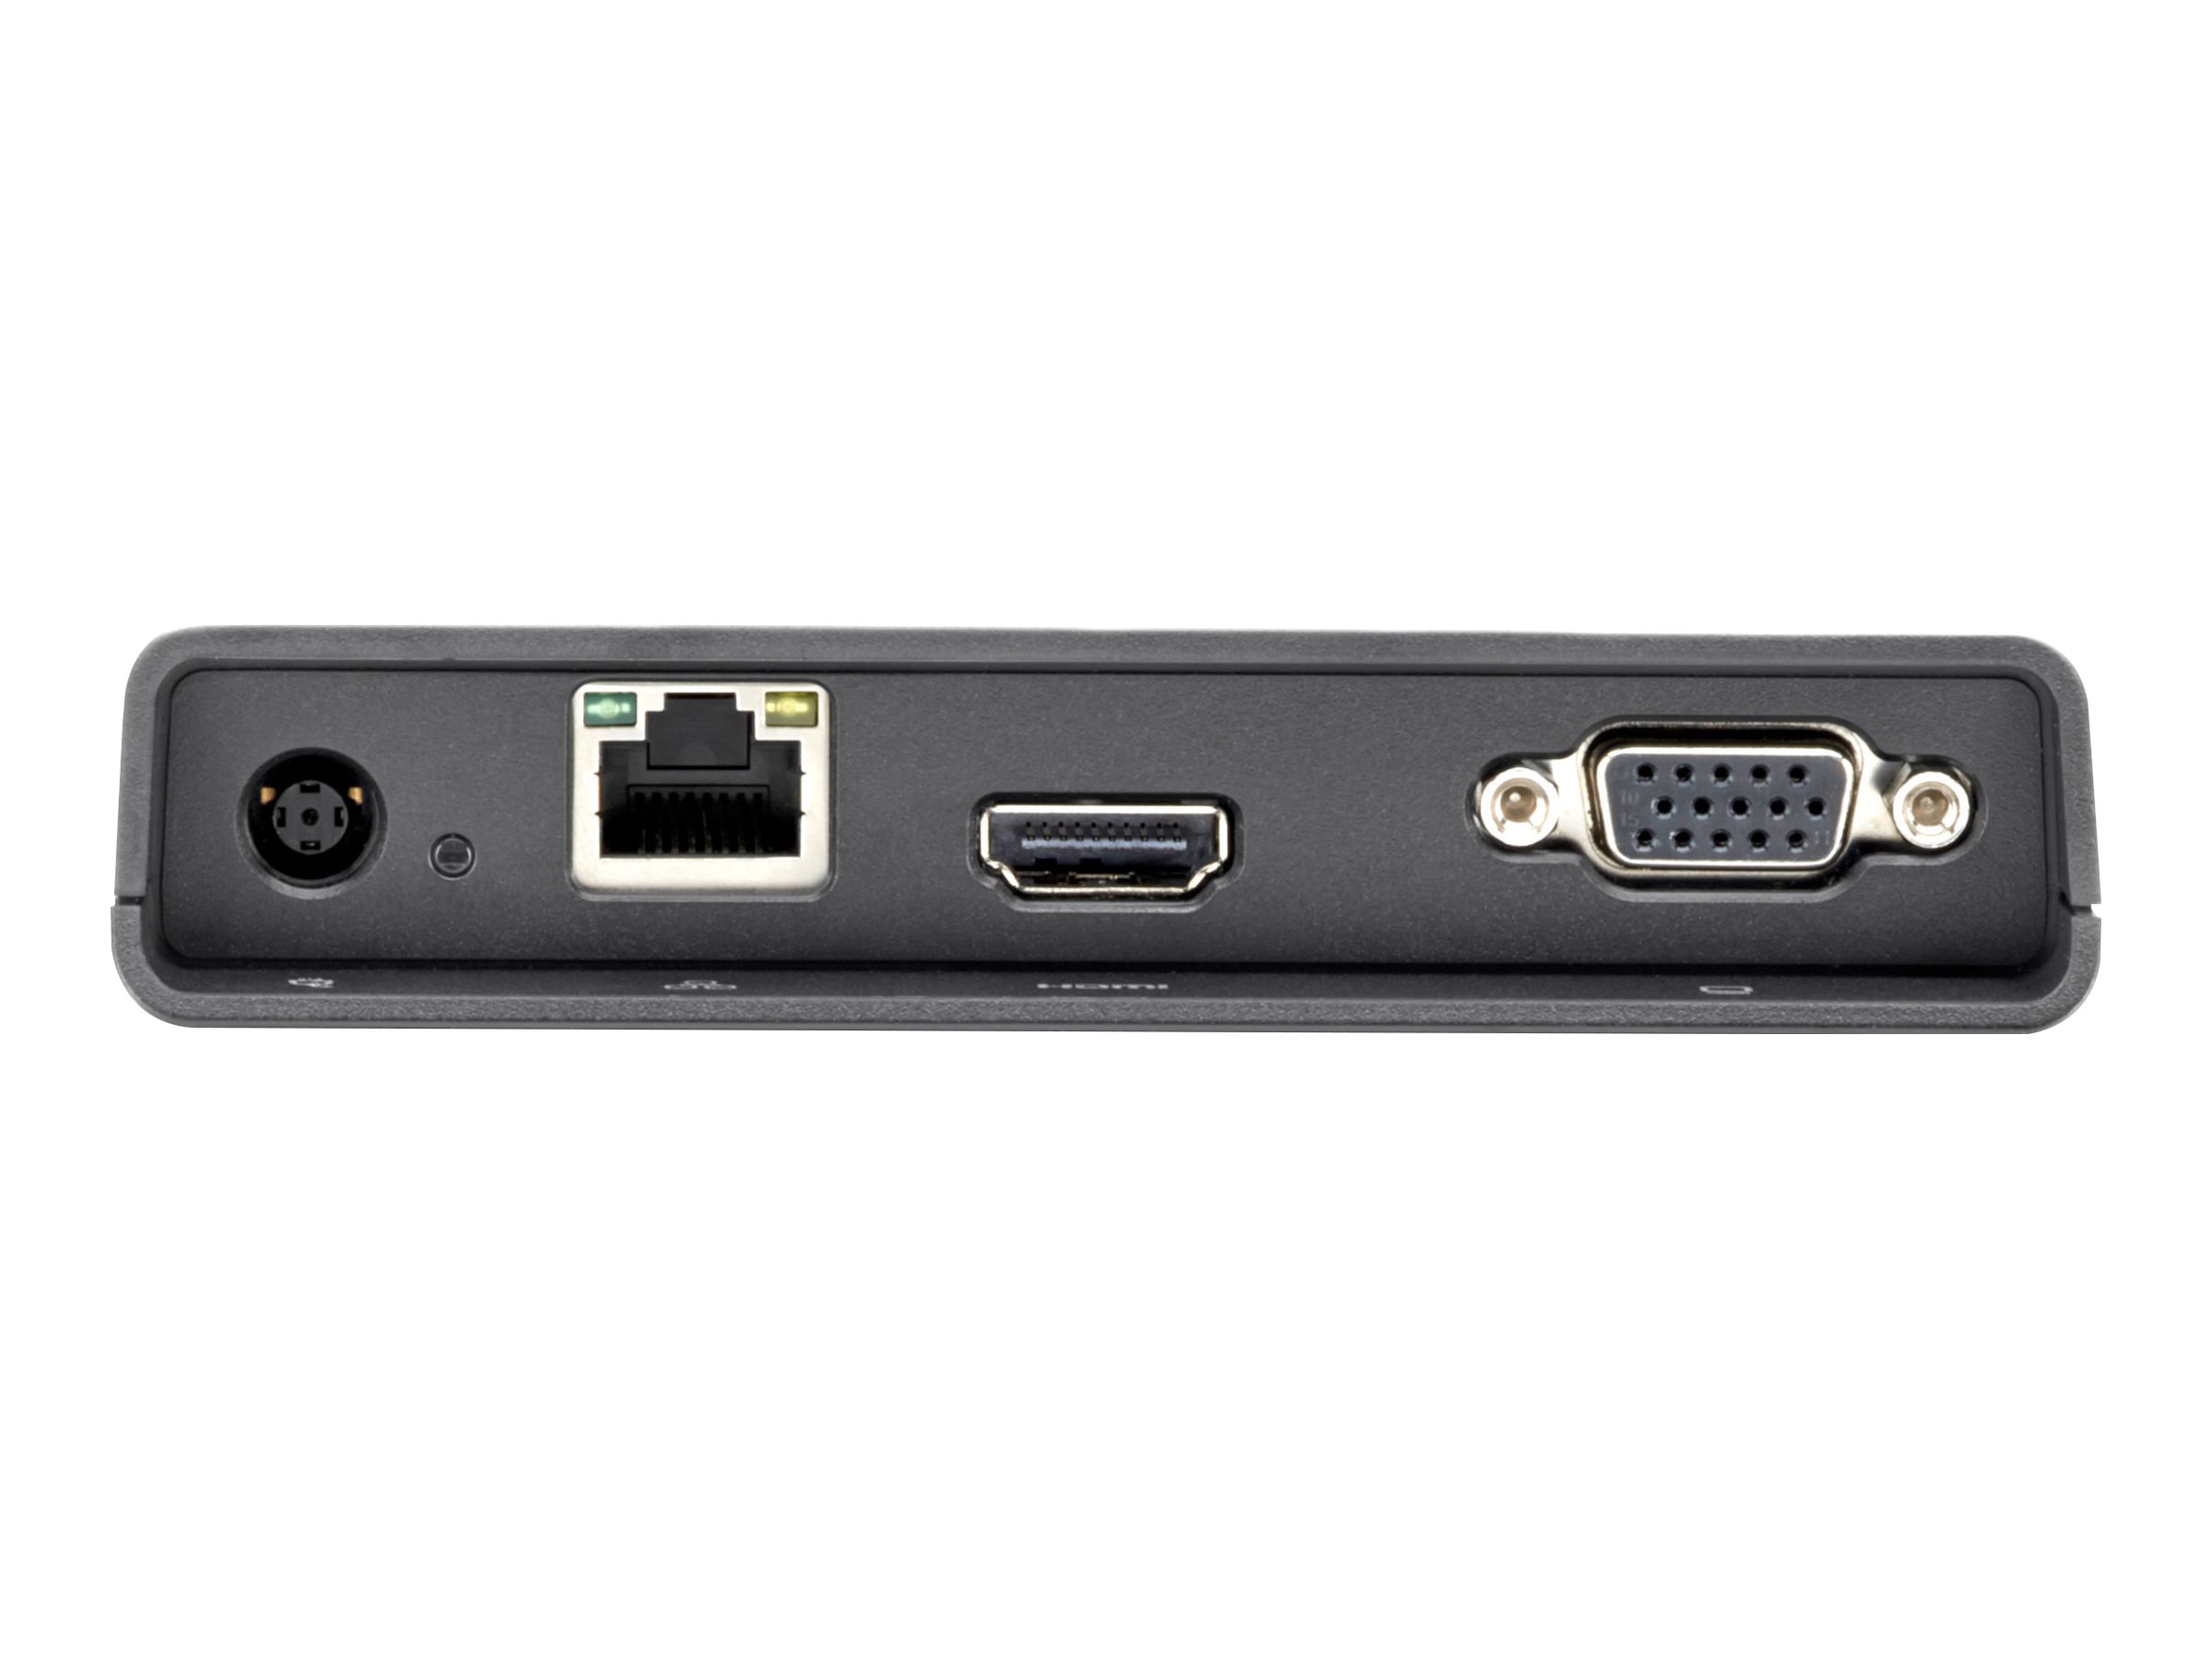 HP 3001pr USB 3.0 Port Replicator F3S42AA#ABA - image 2 of 2